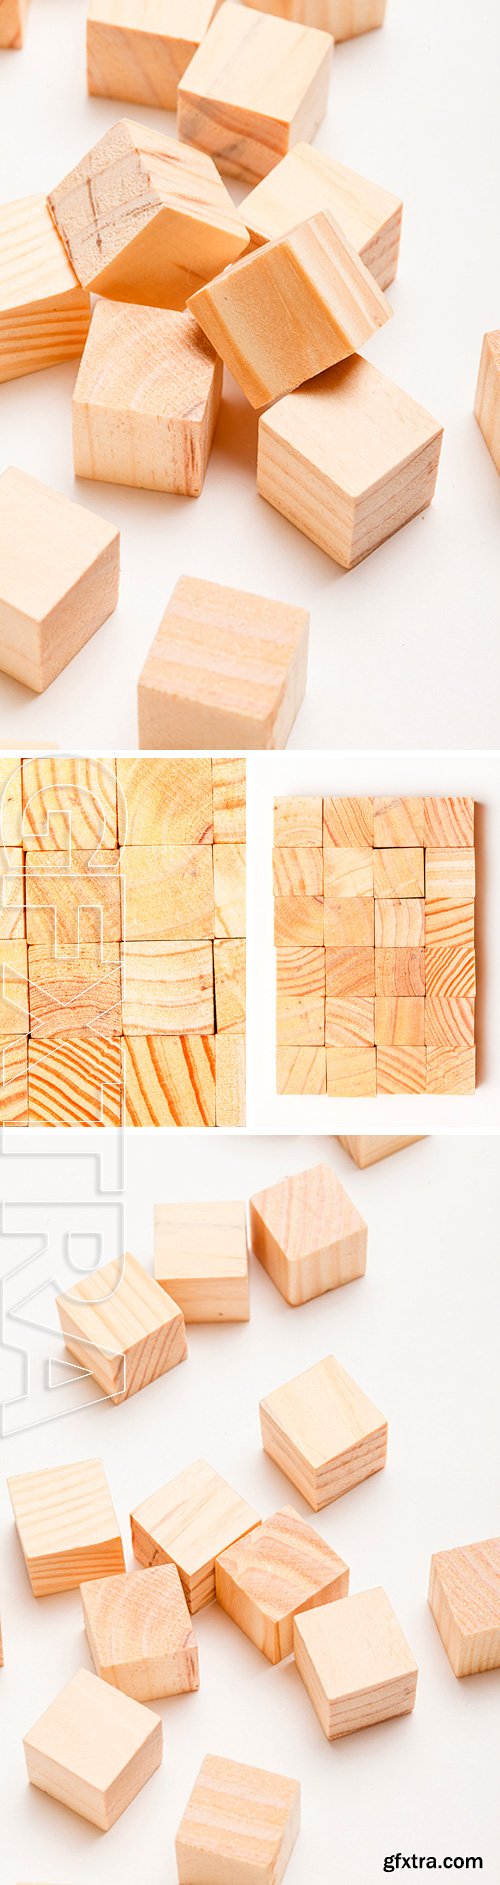 Stock Photos - Wooden toy blocks